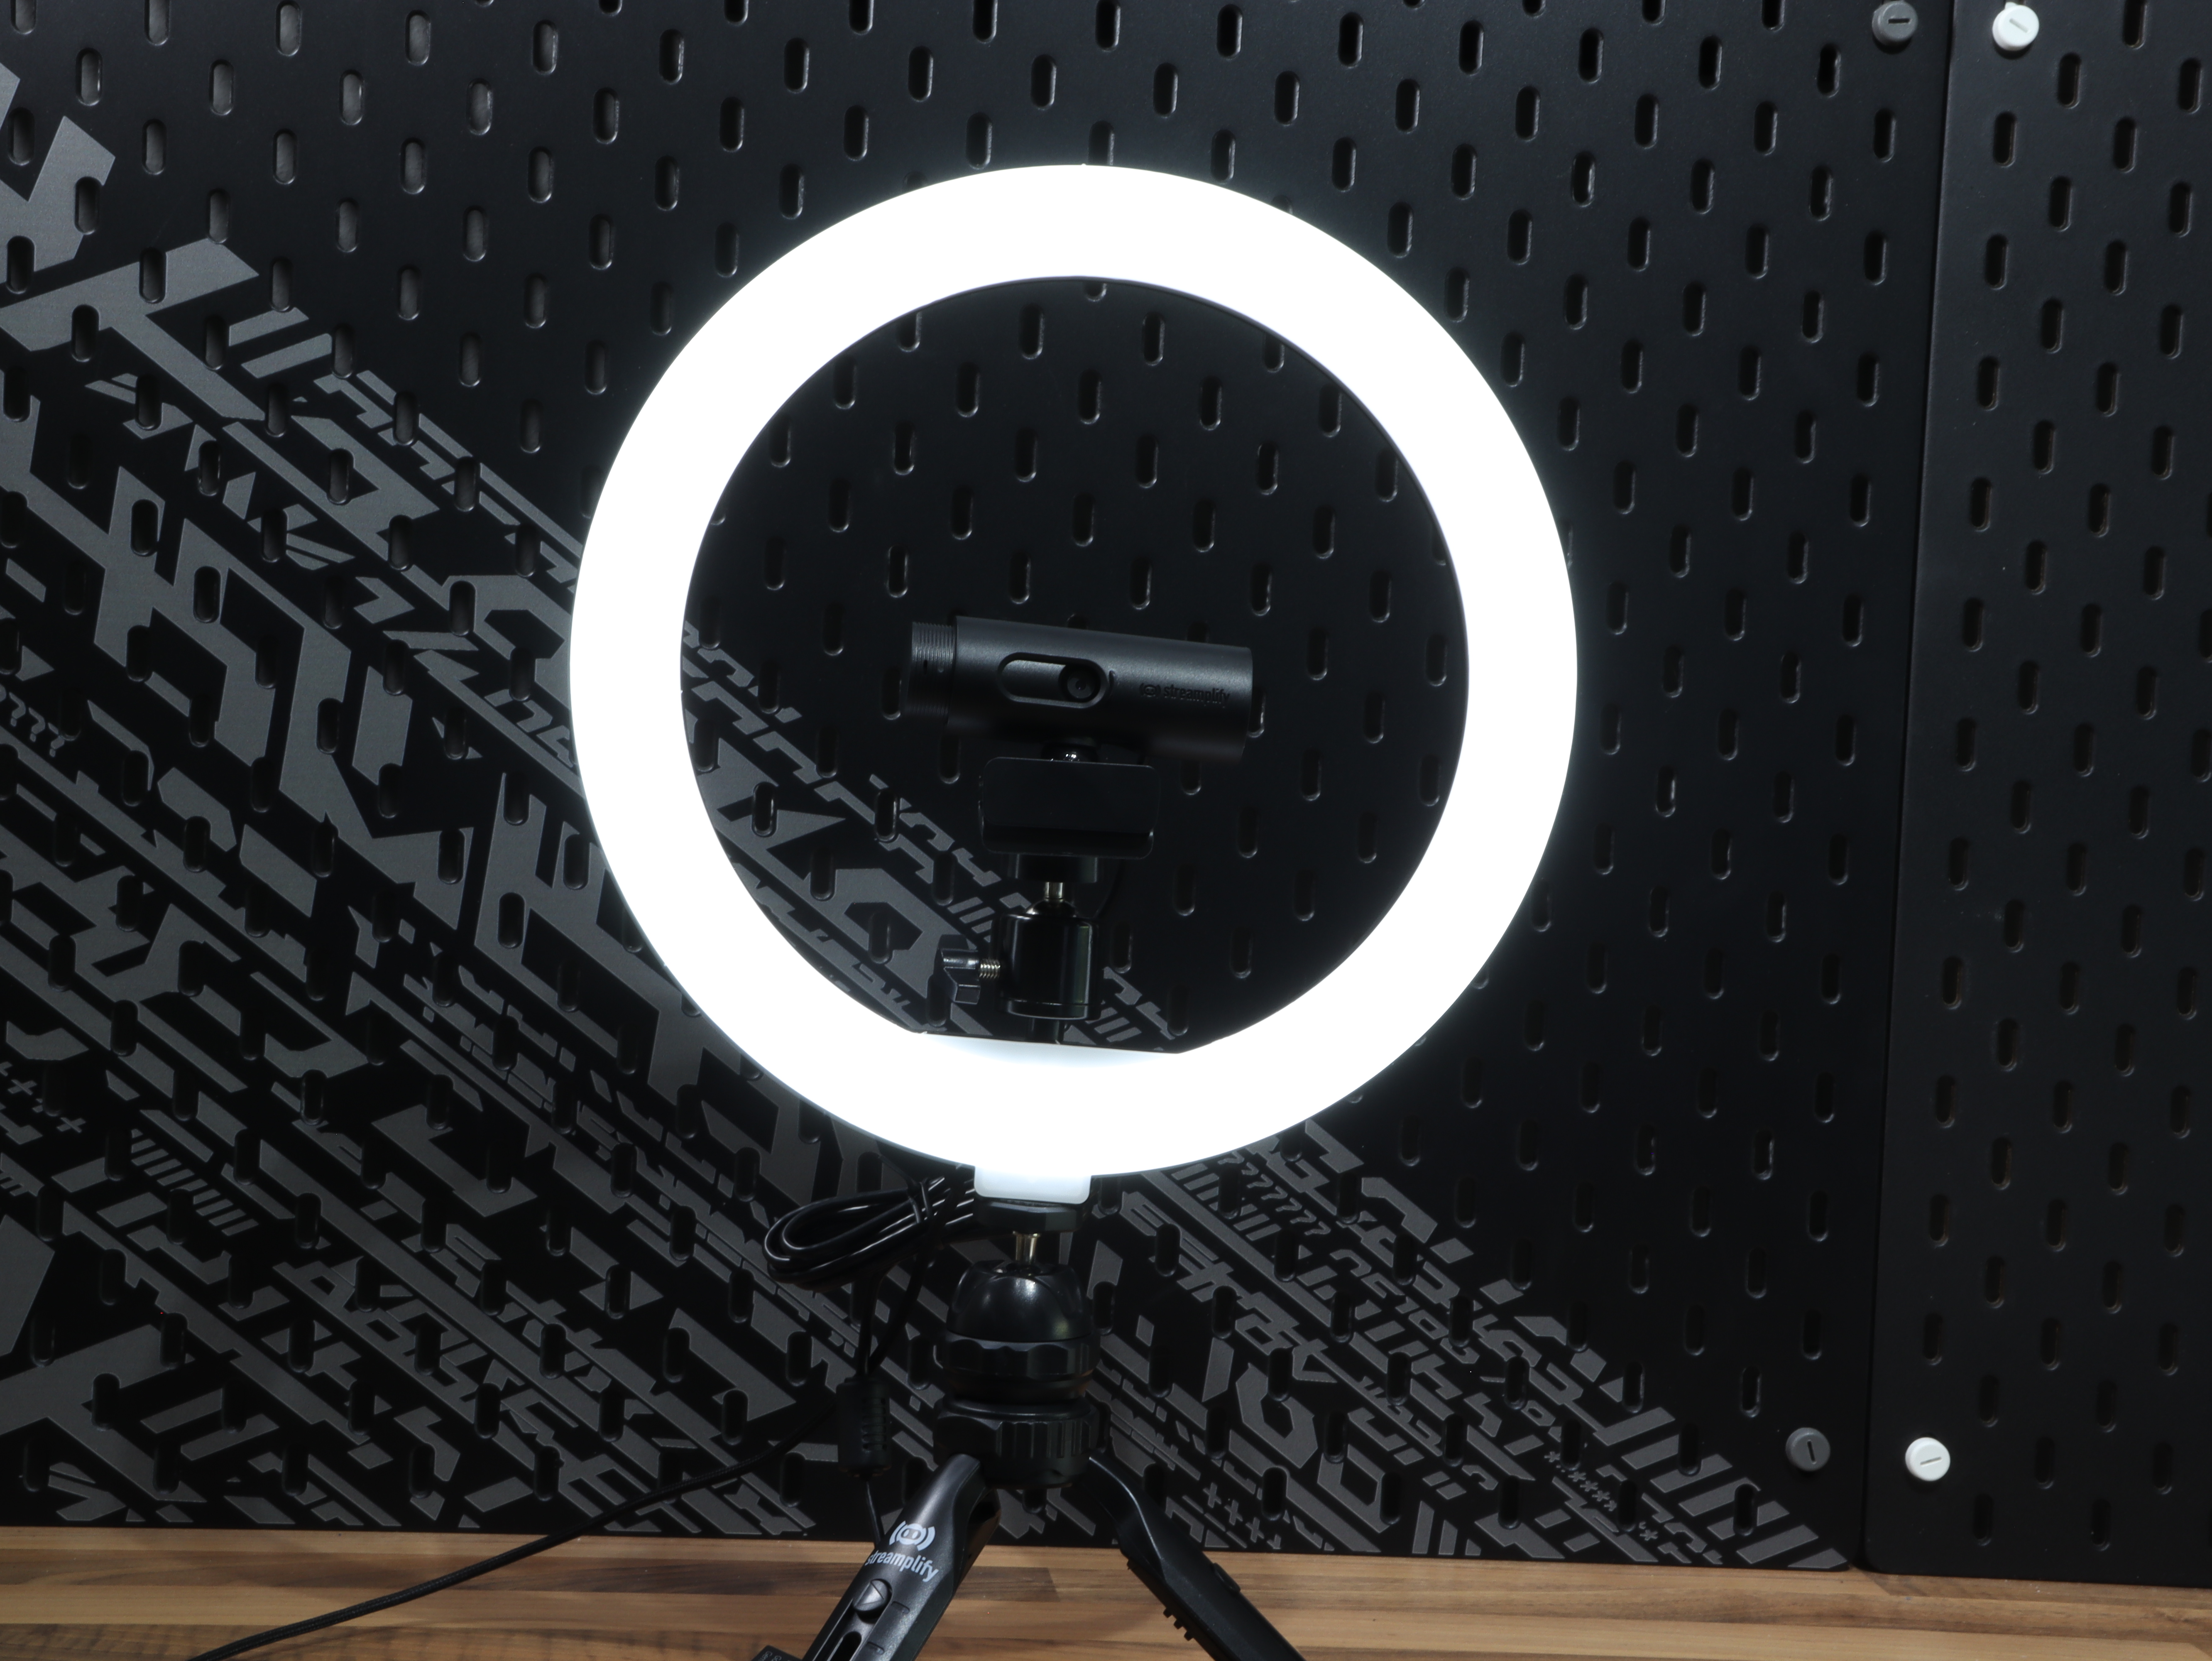 streaming mic acoustic light 10 plates cam focus Streamplify arm 14 sound fps FHD lumen podcast RGB slim auto.JPG